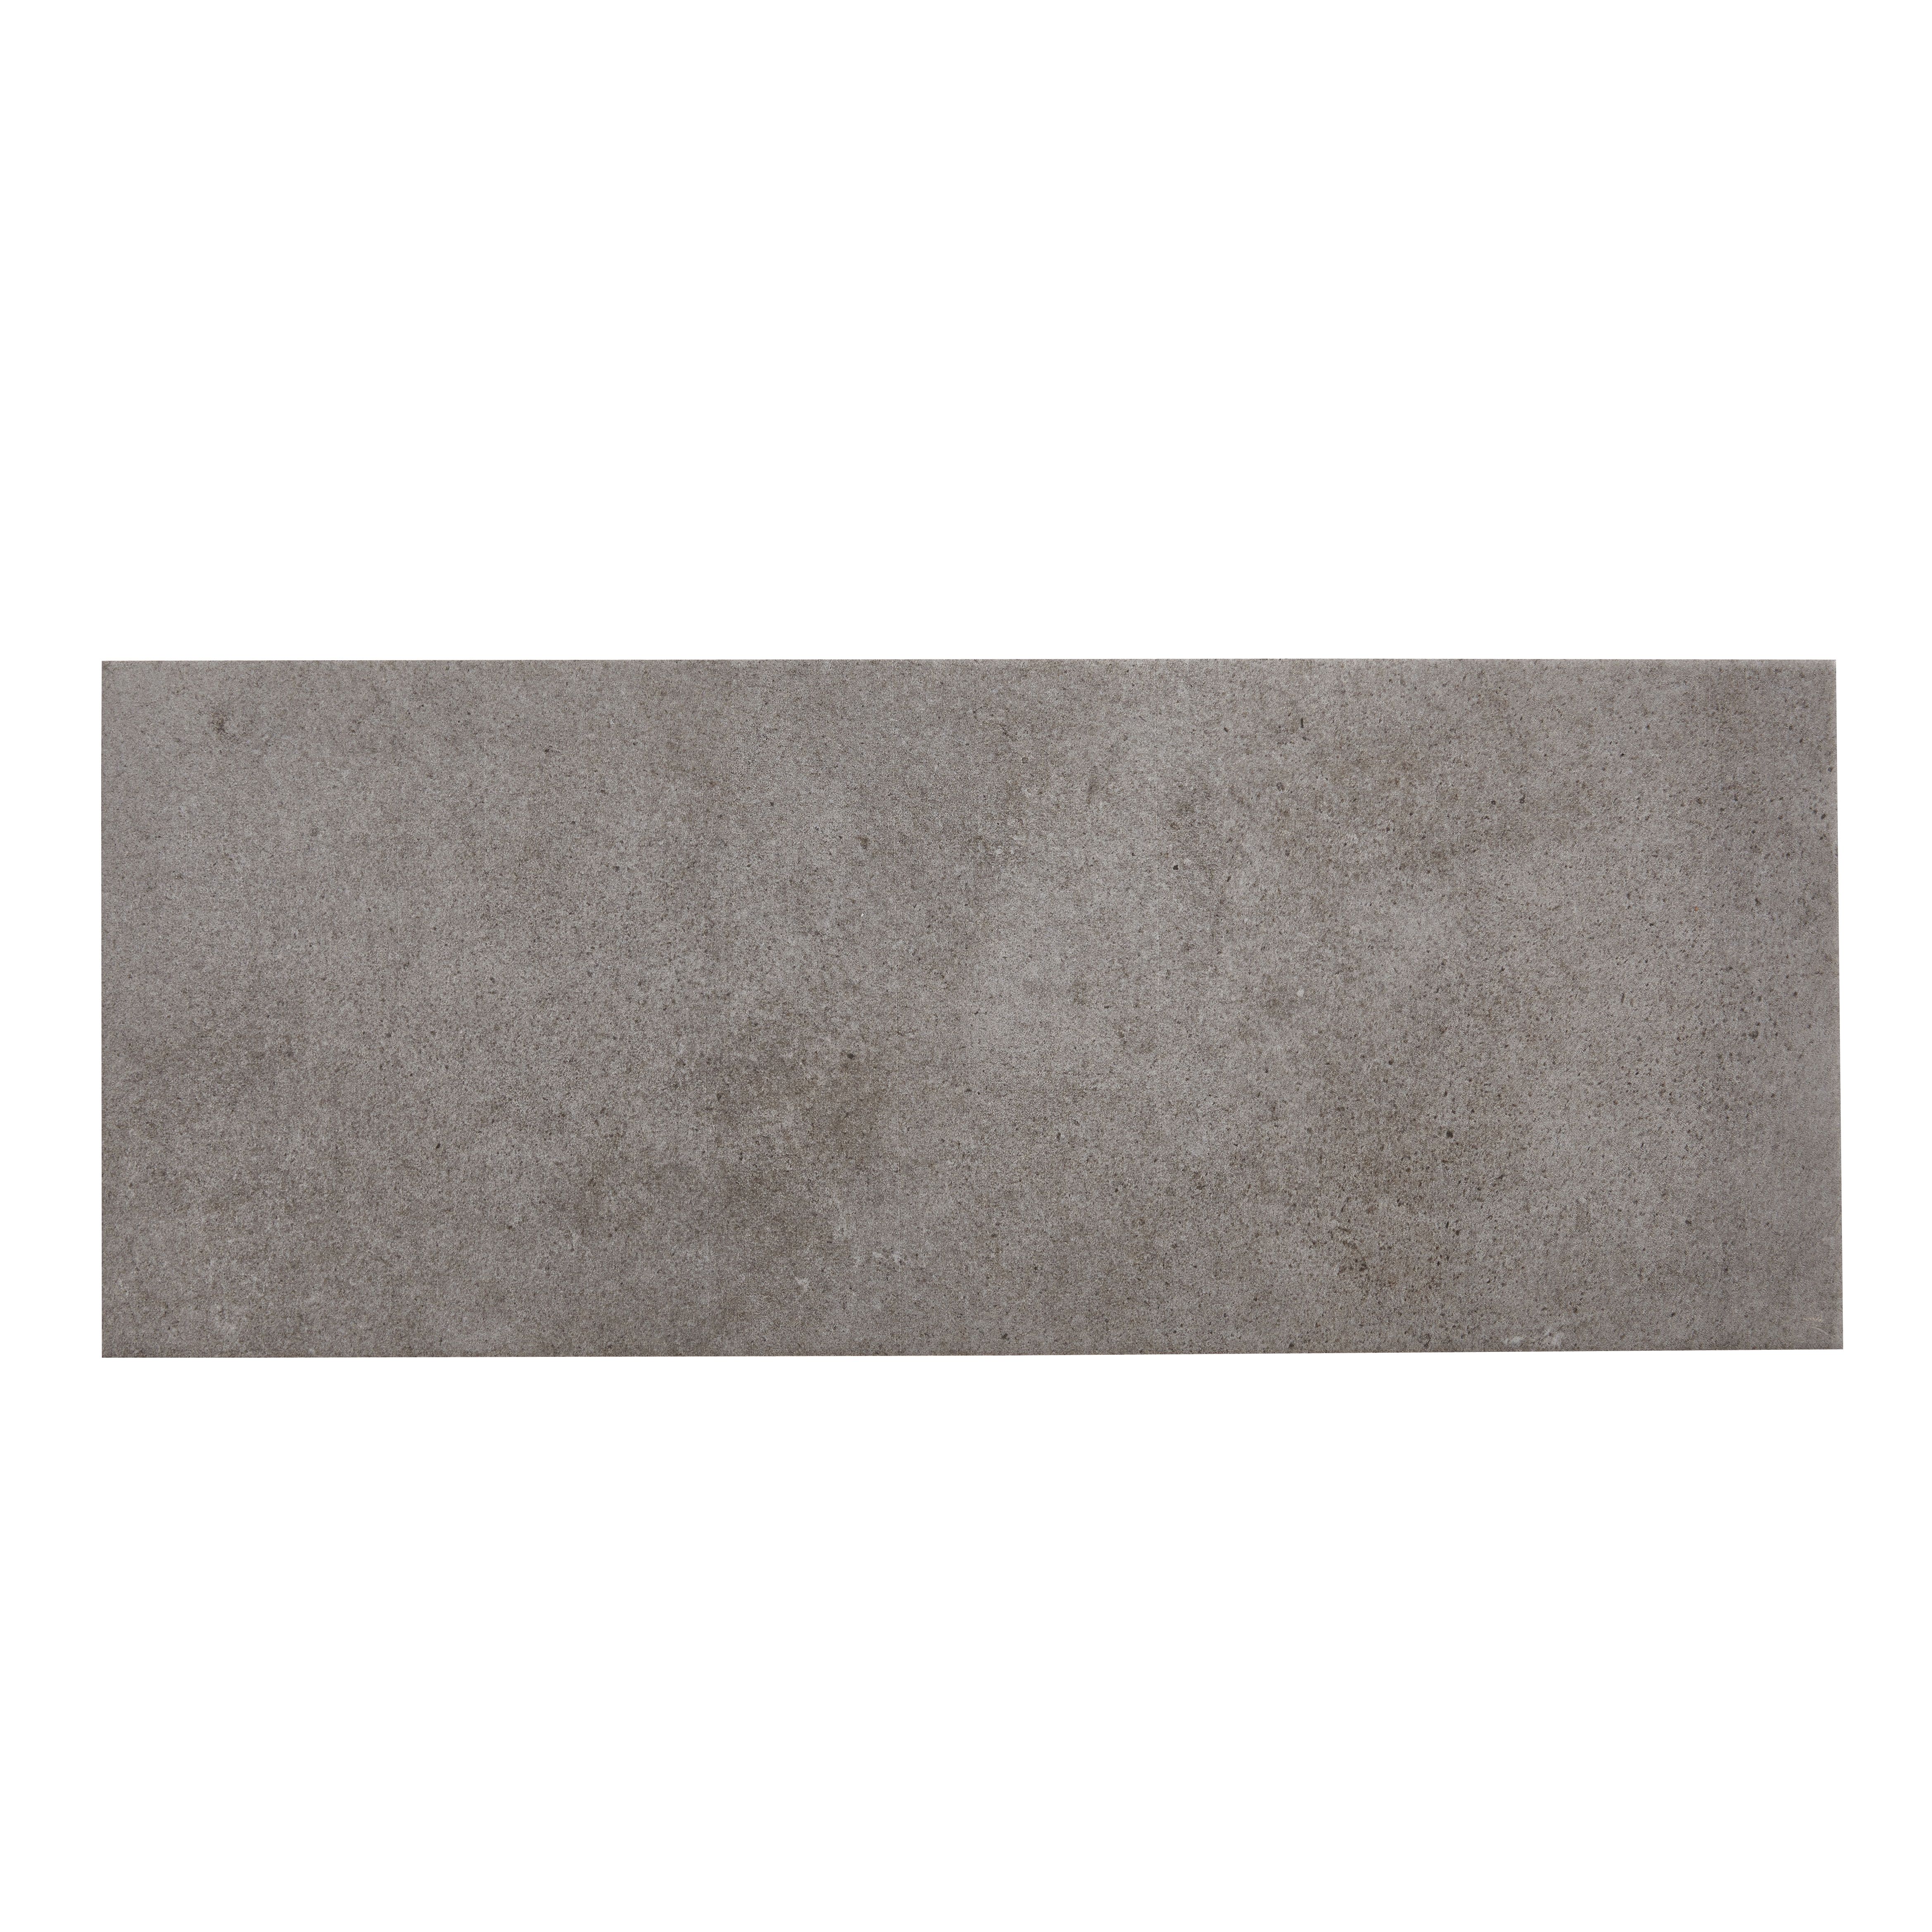 Konkrete Grey Plain Ceramic Wall tile, 1, Sample